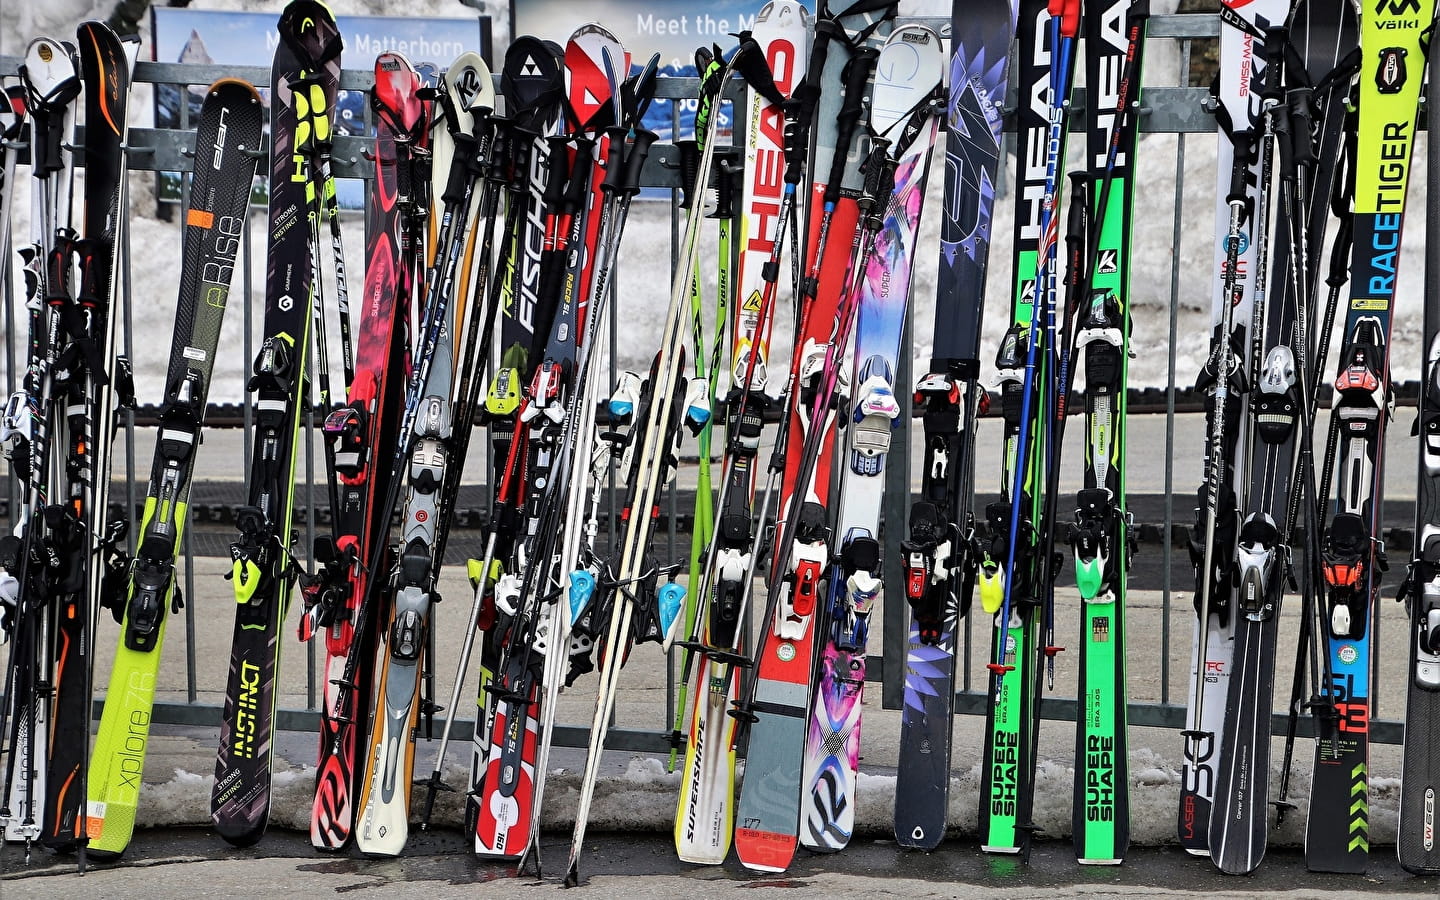 Bourse aux skis Ferney ski club